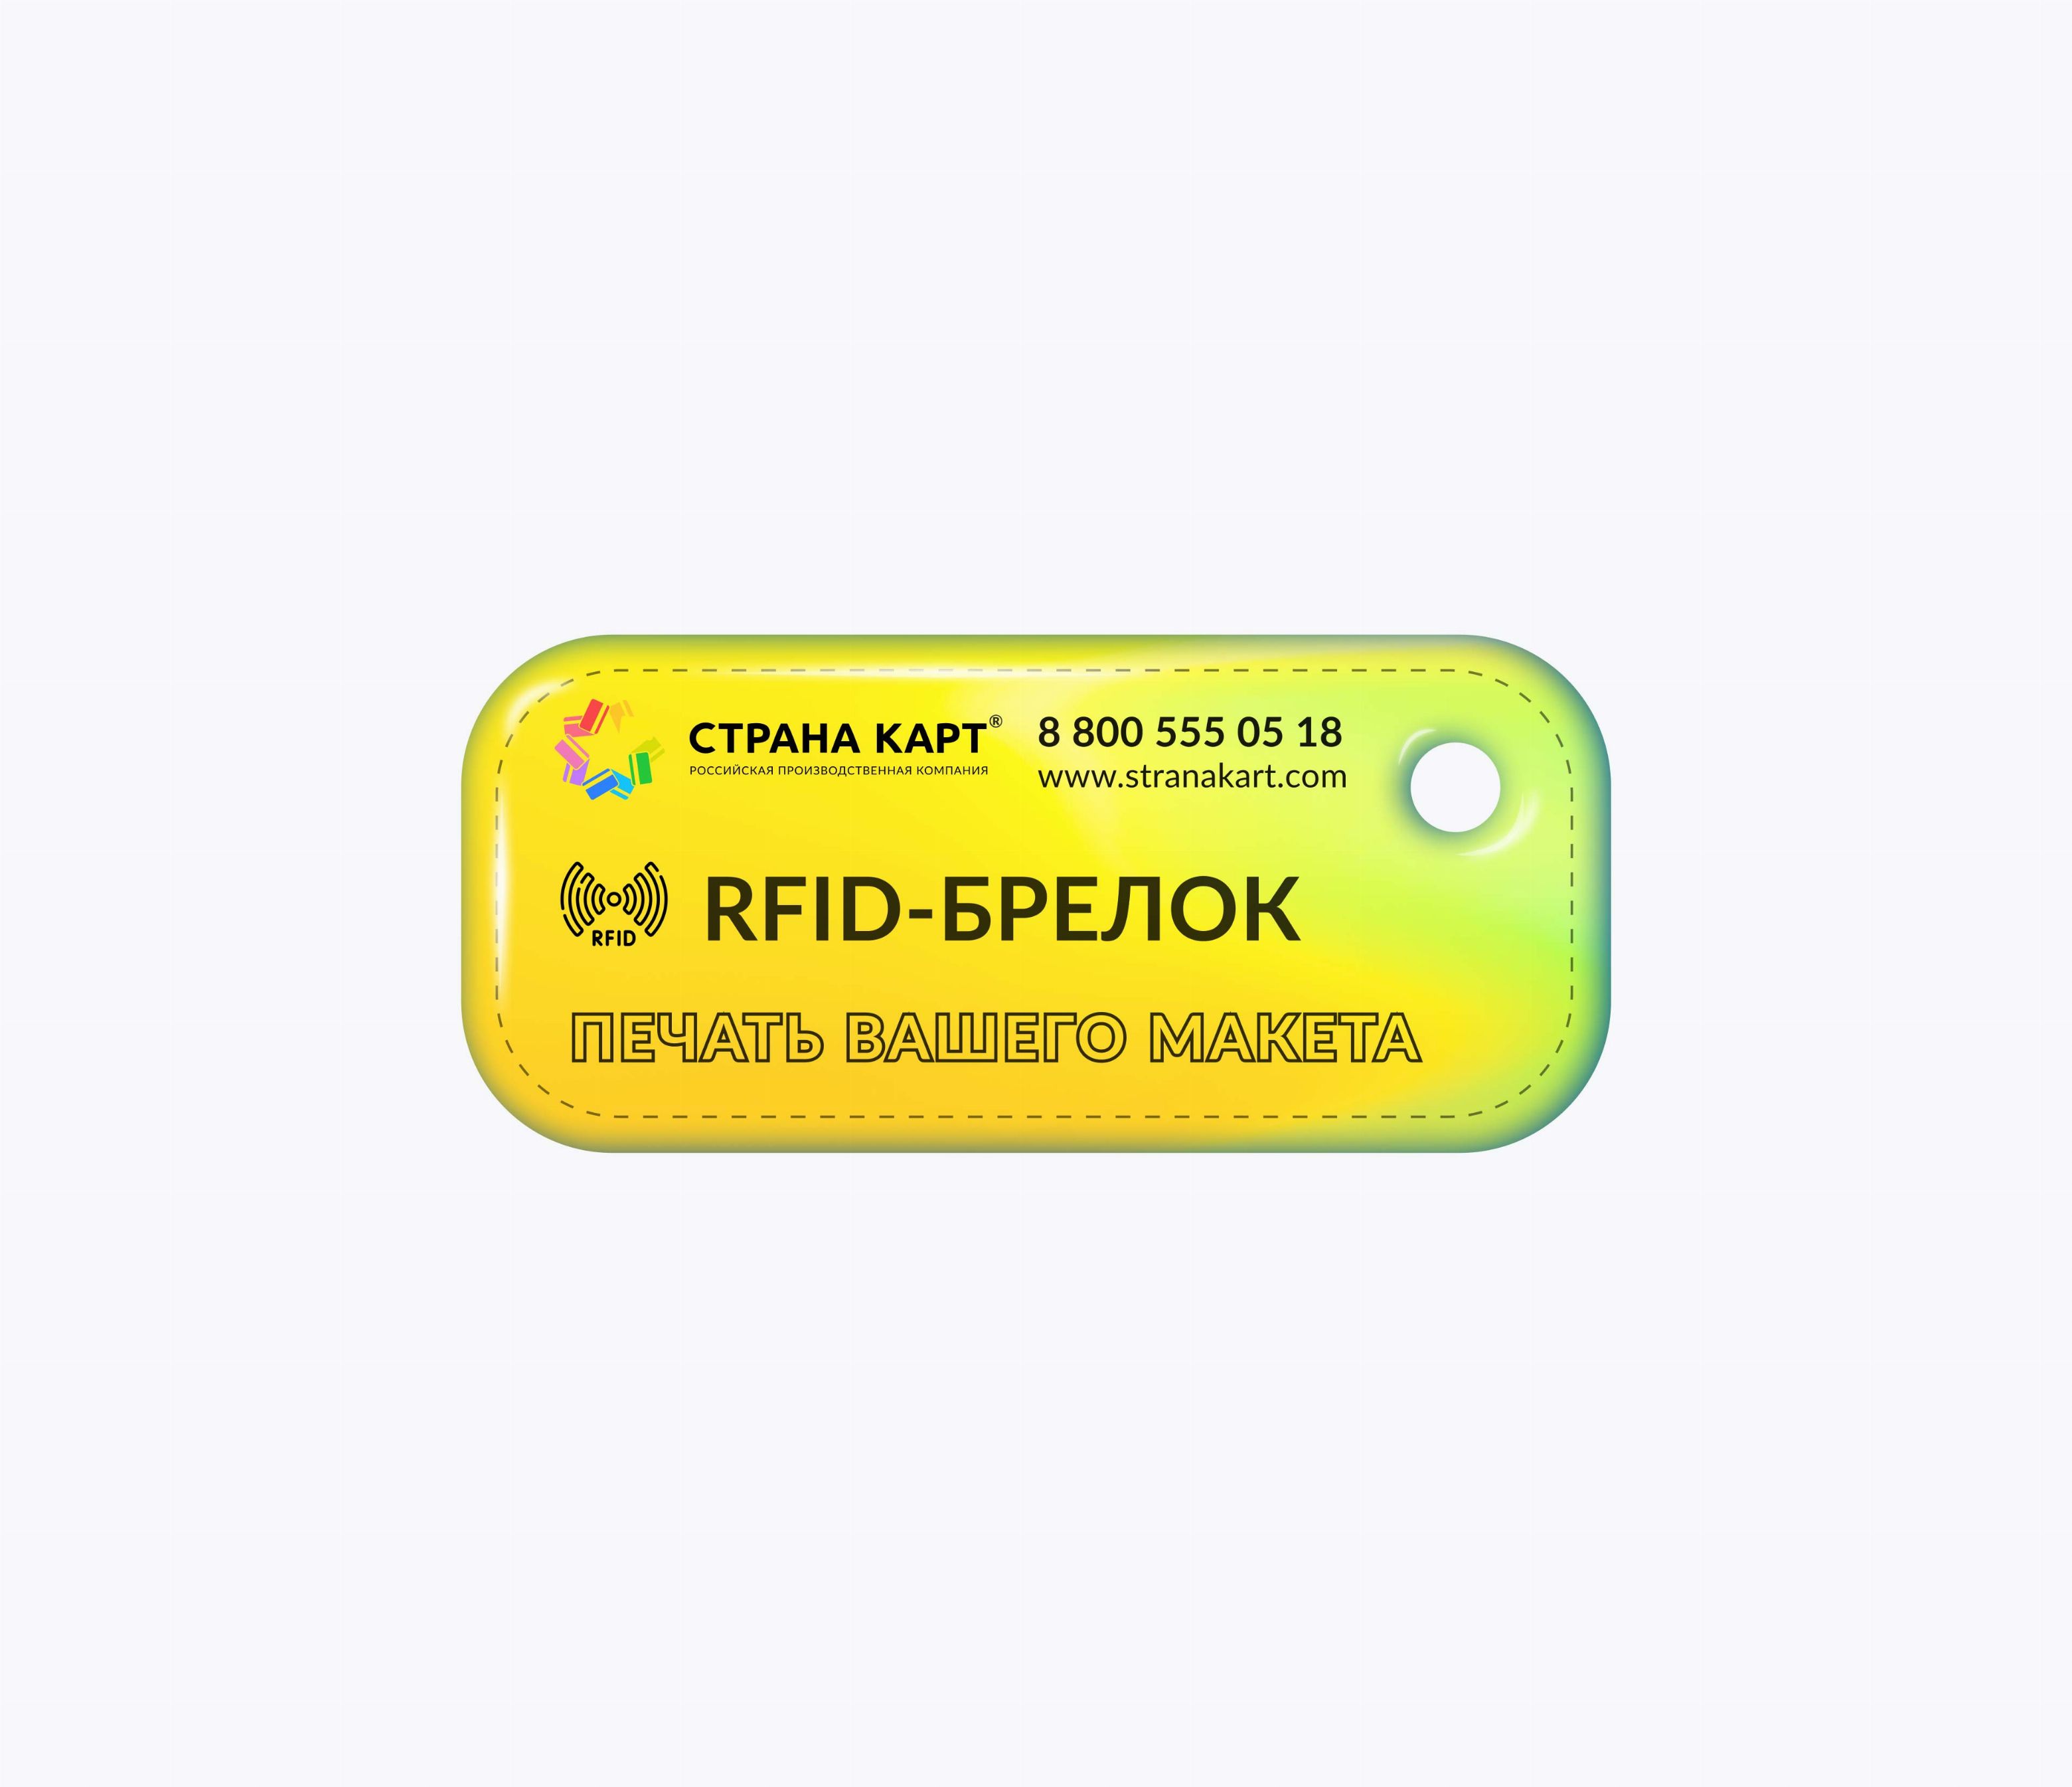 Прямоугольные мини RFID-брелоки NEOKEY® с чипом NXP MIFARE Plus SE 1k 4 byte nUID RFID-брелоки NEOKEY® с чипом NXP MIFARE Plus SE 1k 4 byte nUID и вашим логотипом